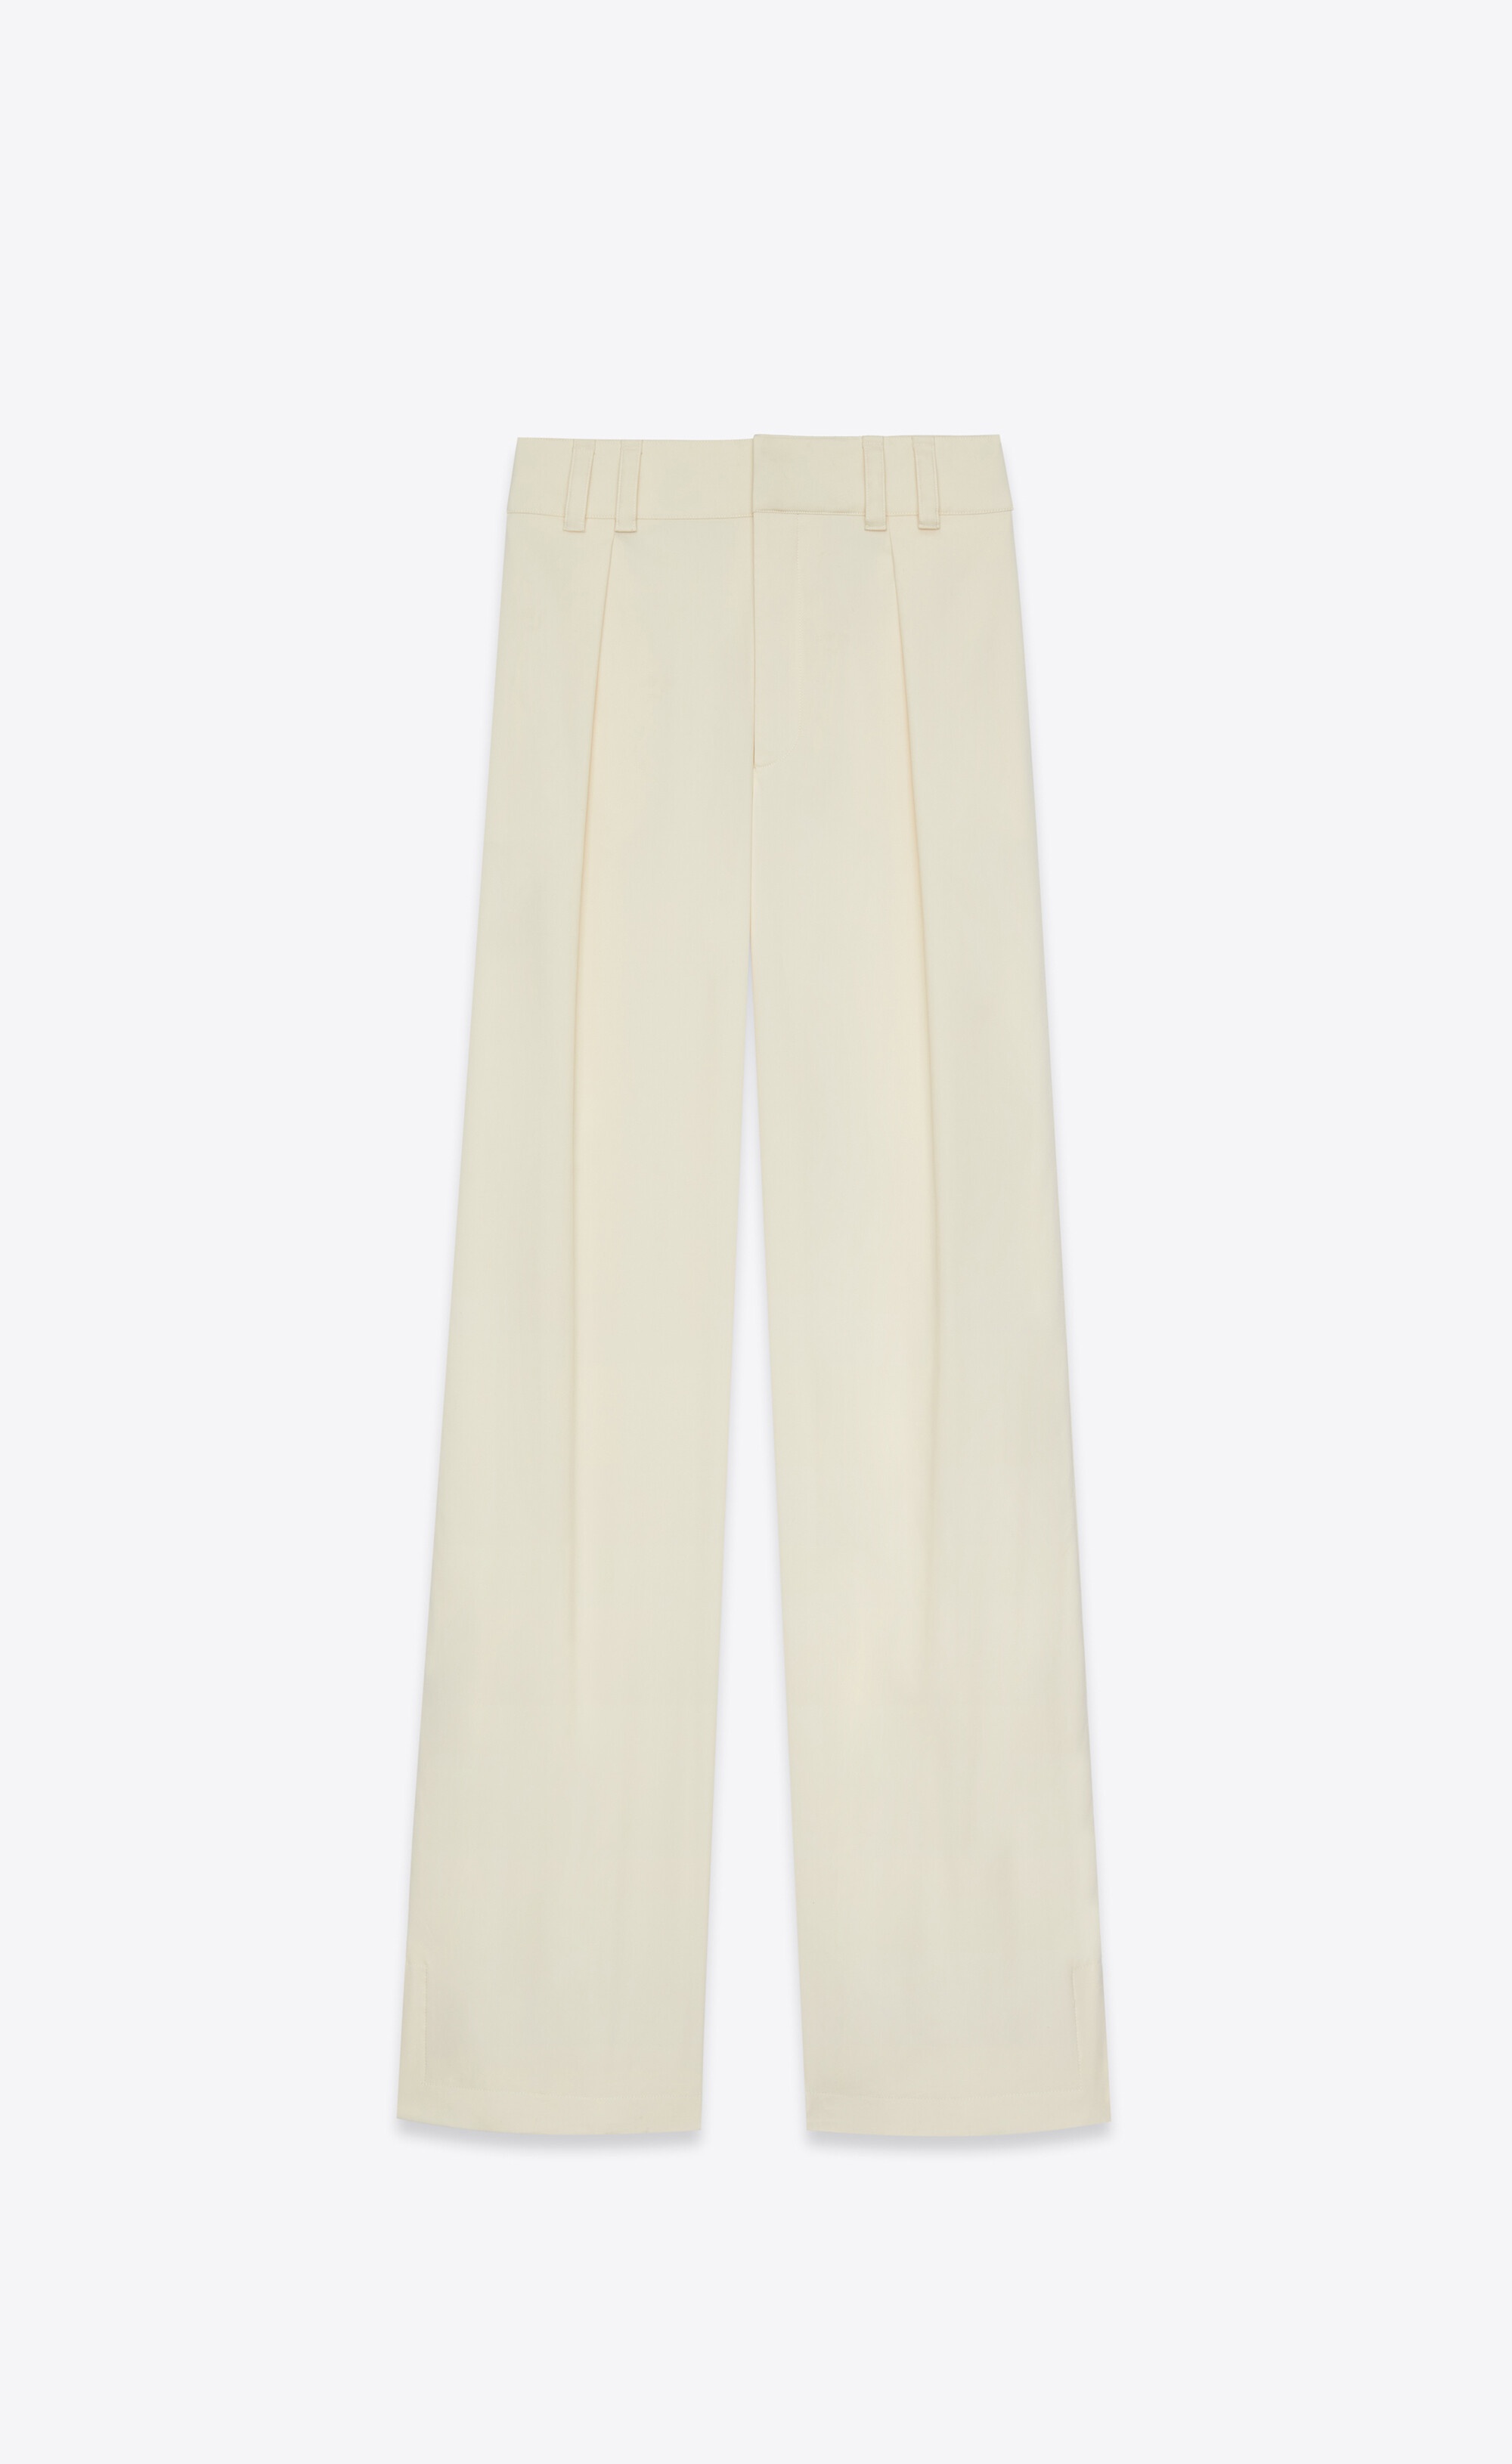 pants in cotton sateen - 1